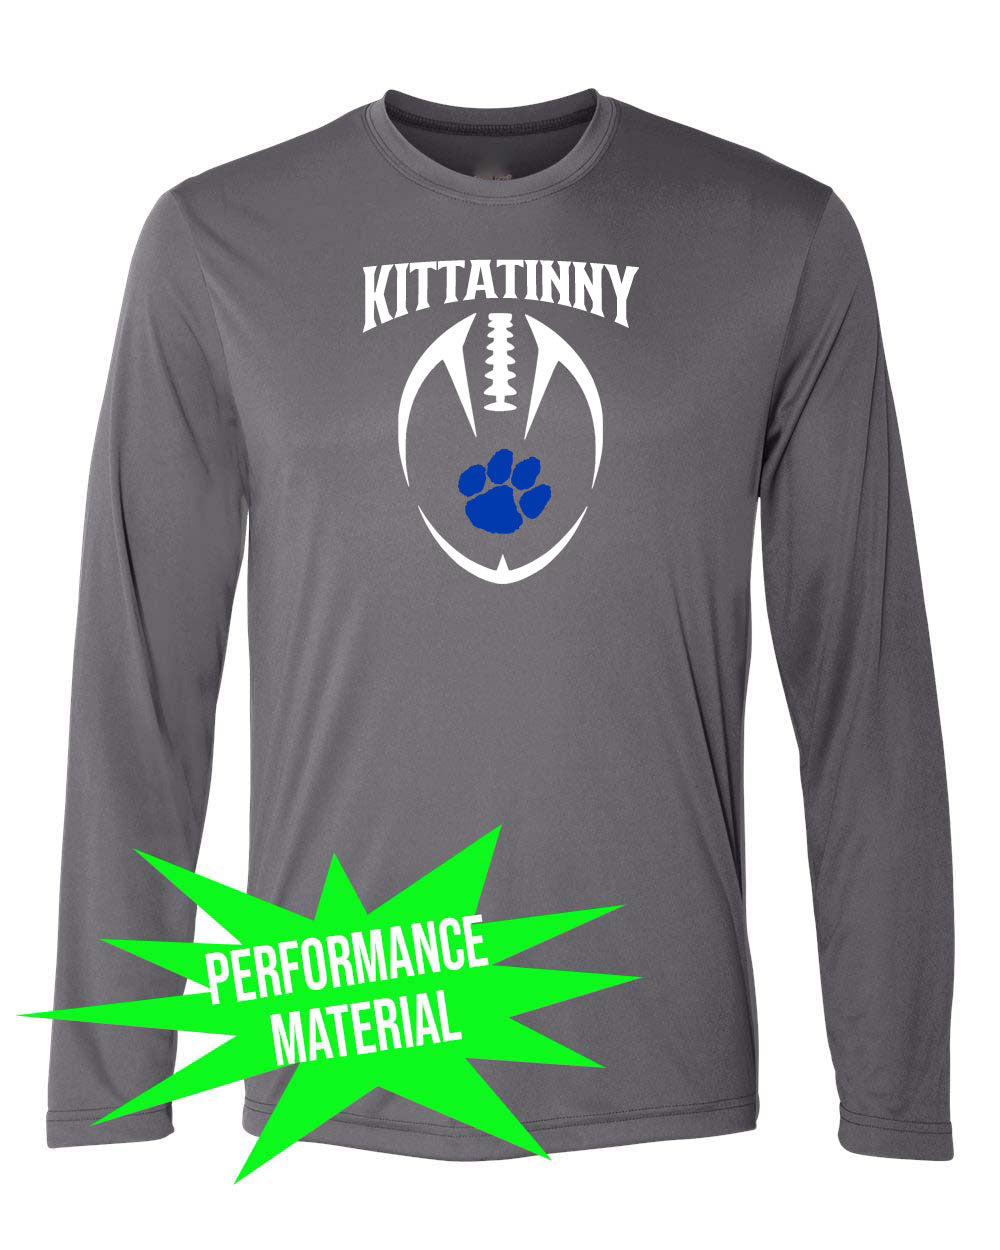 Kittatinny Football Performance Material Design 8 Long Sleeve Shirt